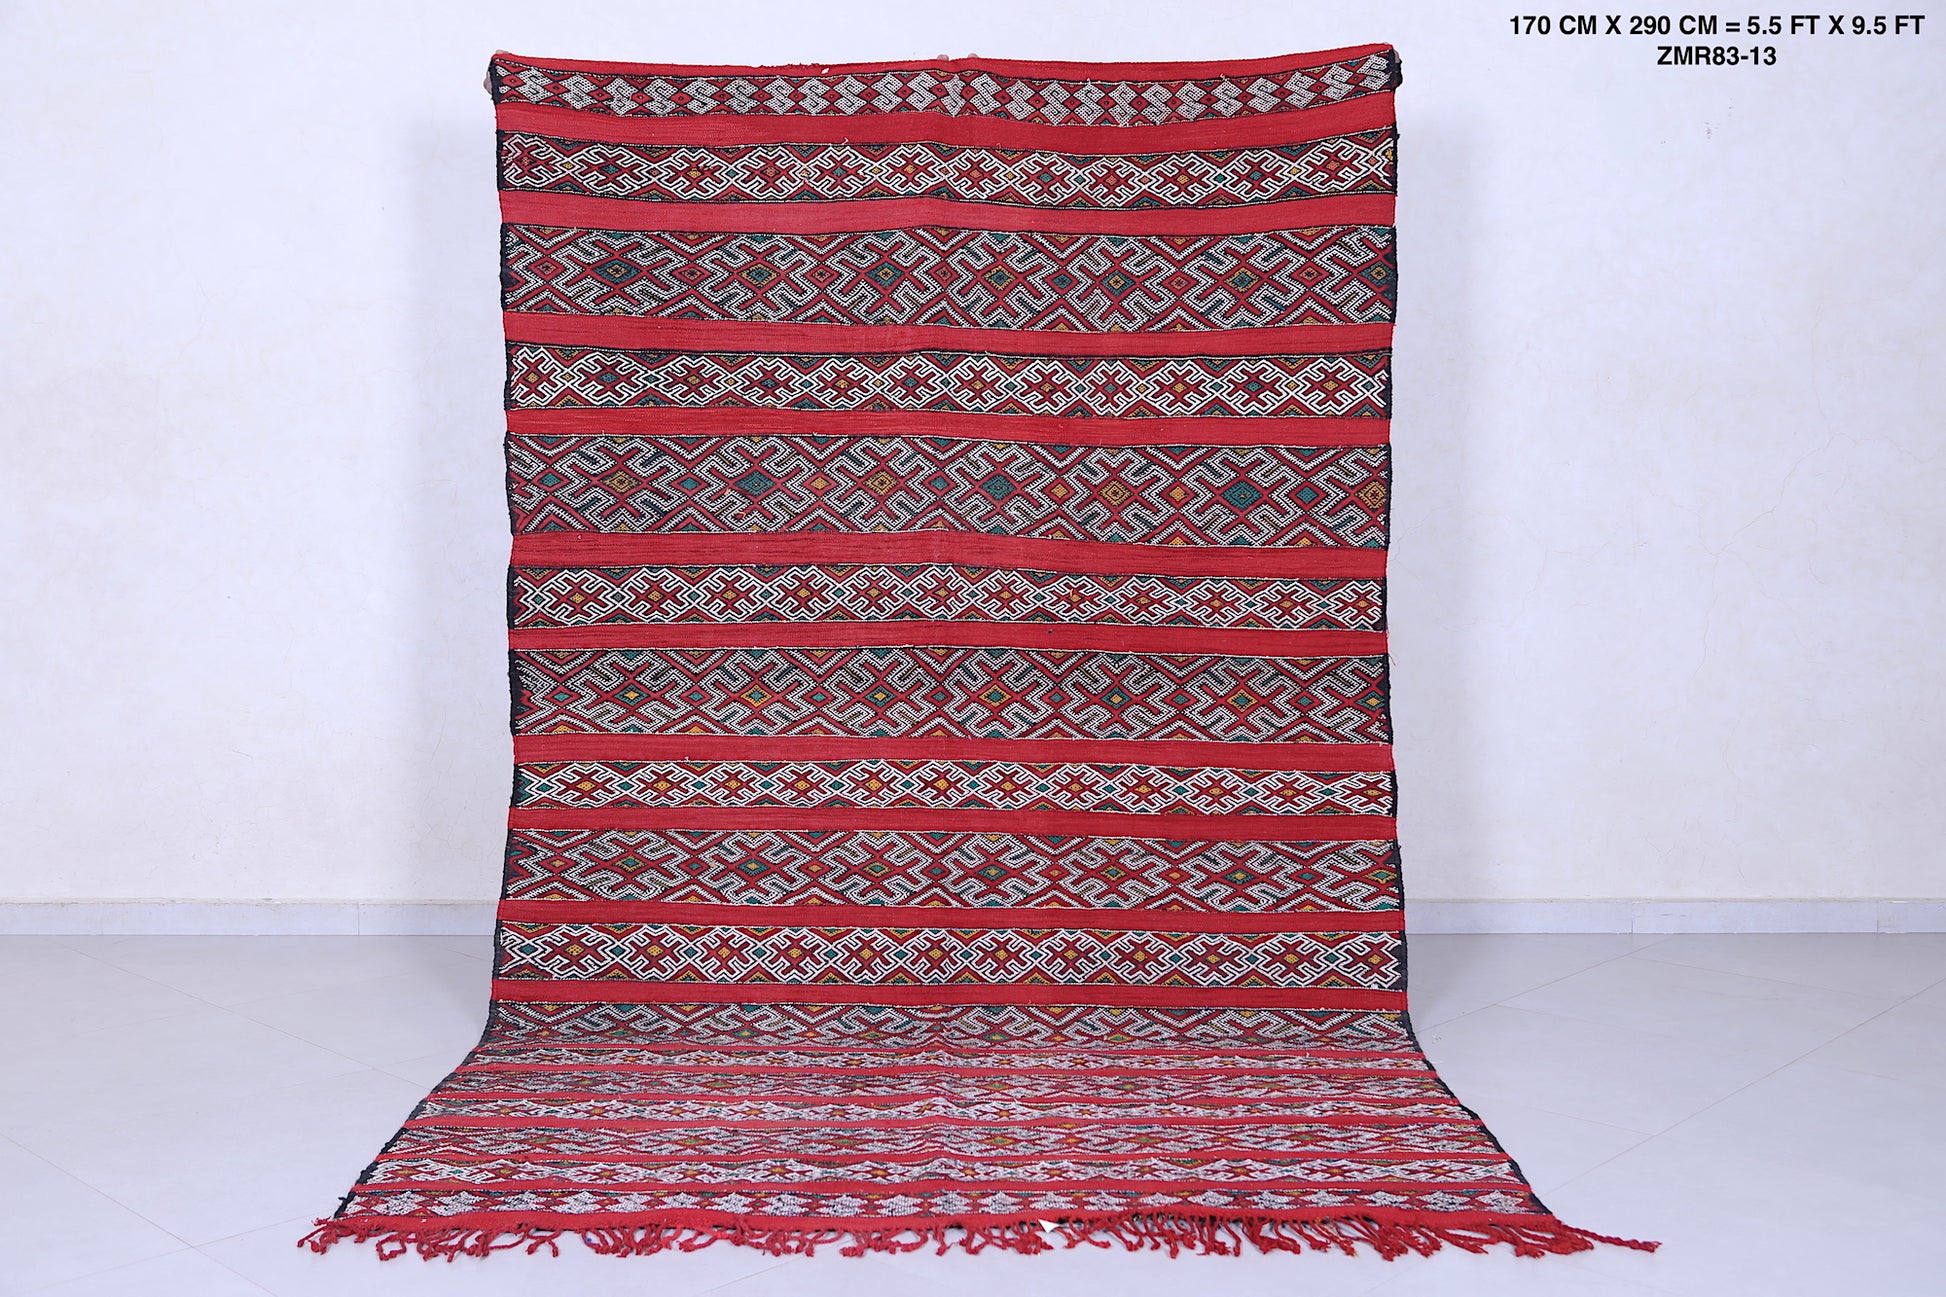 Handwoven Berber kilim 5.5 X 9.5 Feet